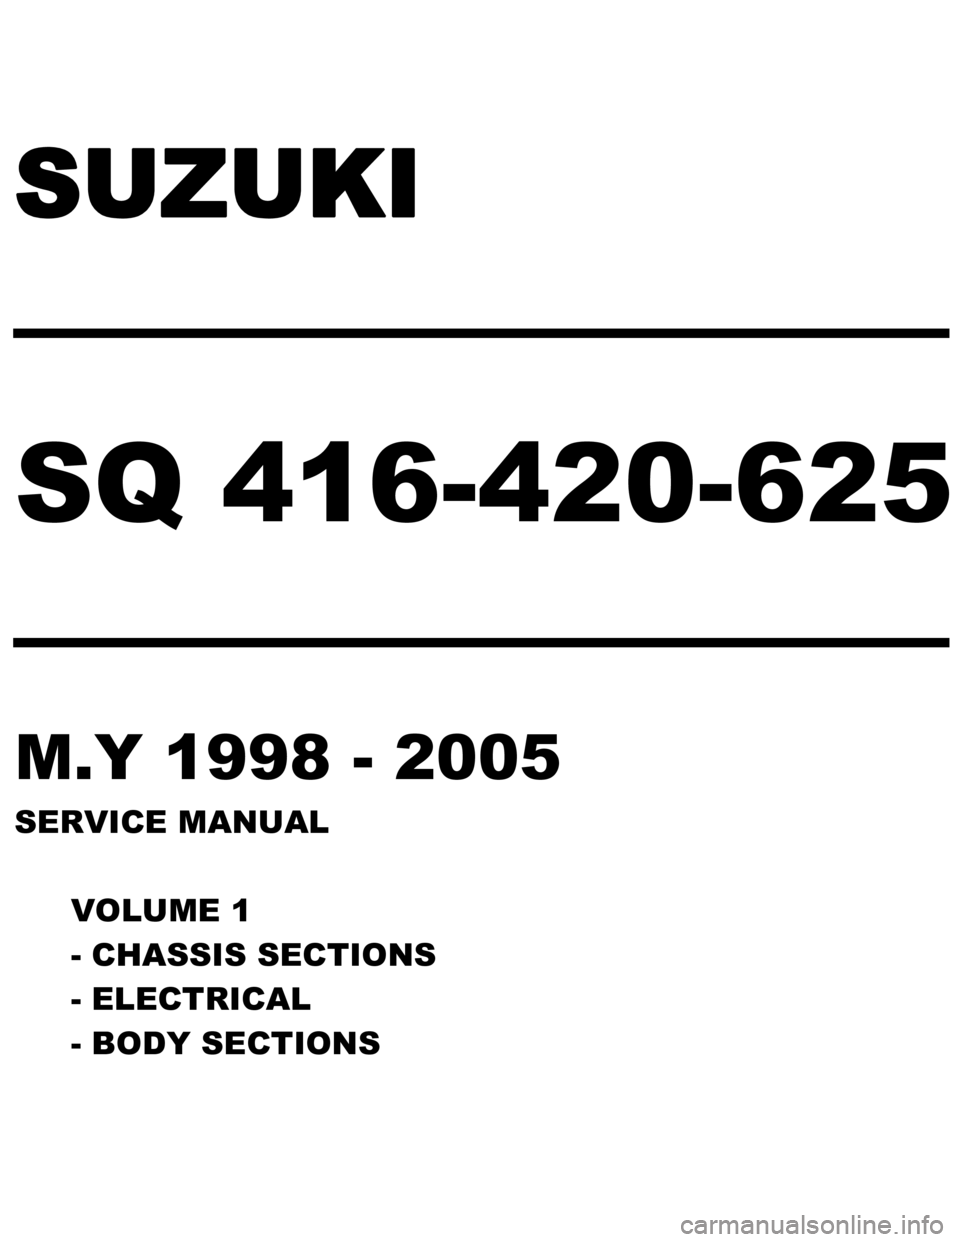 SUZUKI GRAND VITARA 2000 2.G Service Workshop Manual 
SUZUKI  
──────────── 
SQ 416-420-625 
──────────── 
M.Y 1998 - 2005 
SERVICE MANUAL   
VOLUME 1 
- CHASSIS SECTIONS 
- ELECTRICAL 
- BODY SECTIONS  